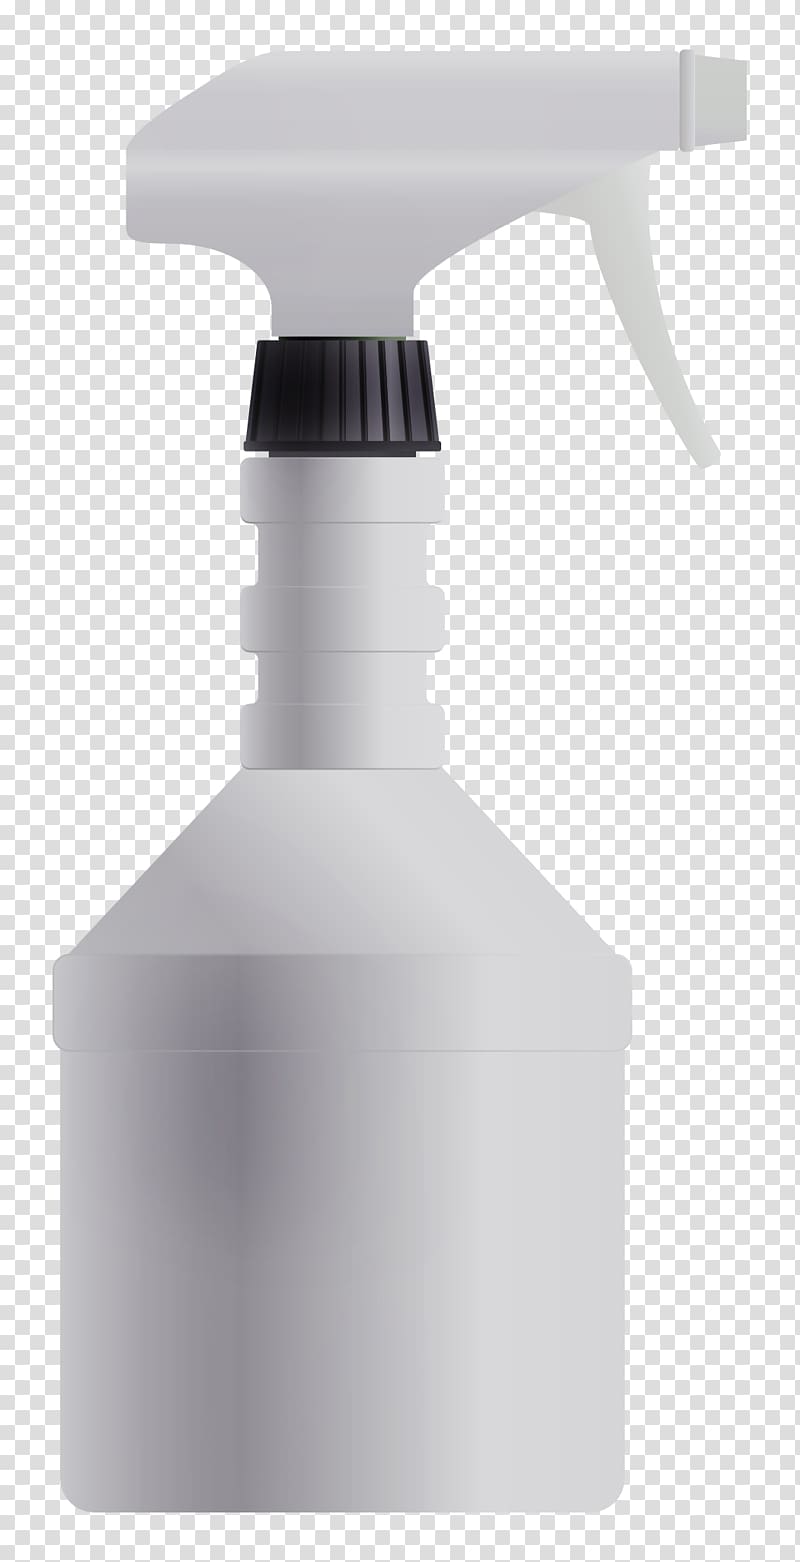 Water cooler Plastic bottle , Water Sprayer transparent background PNG clipart